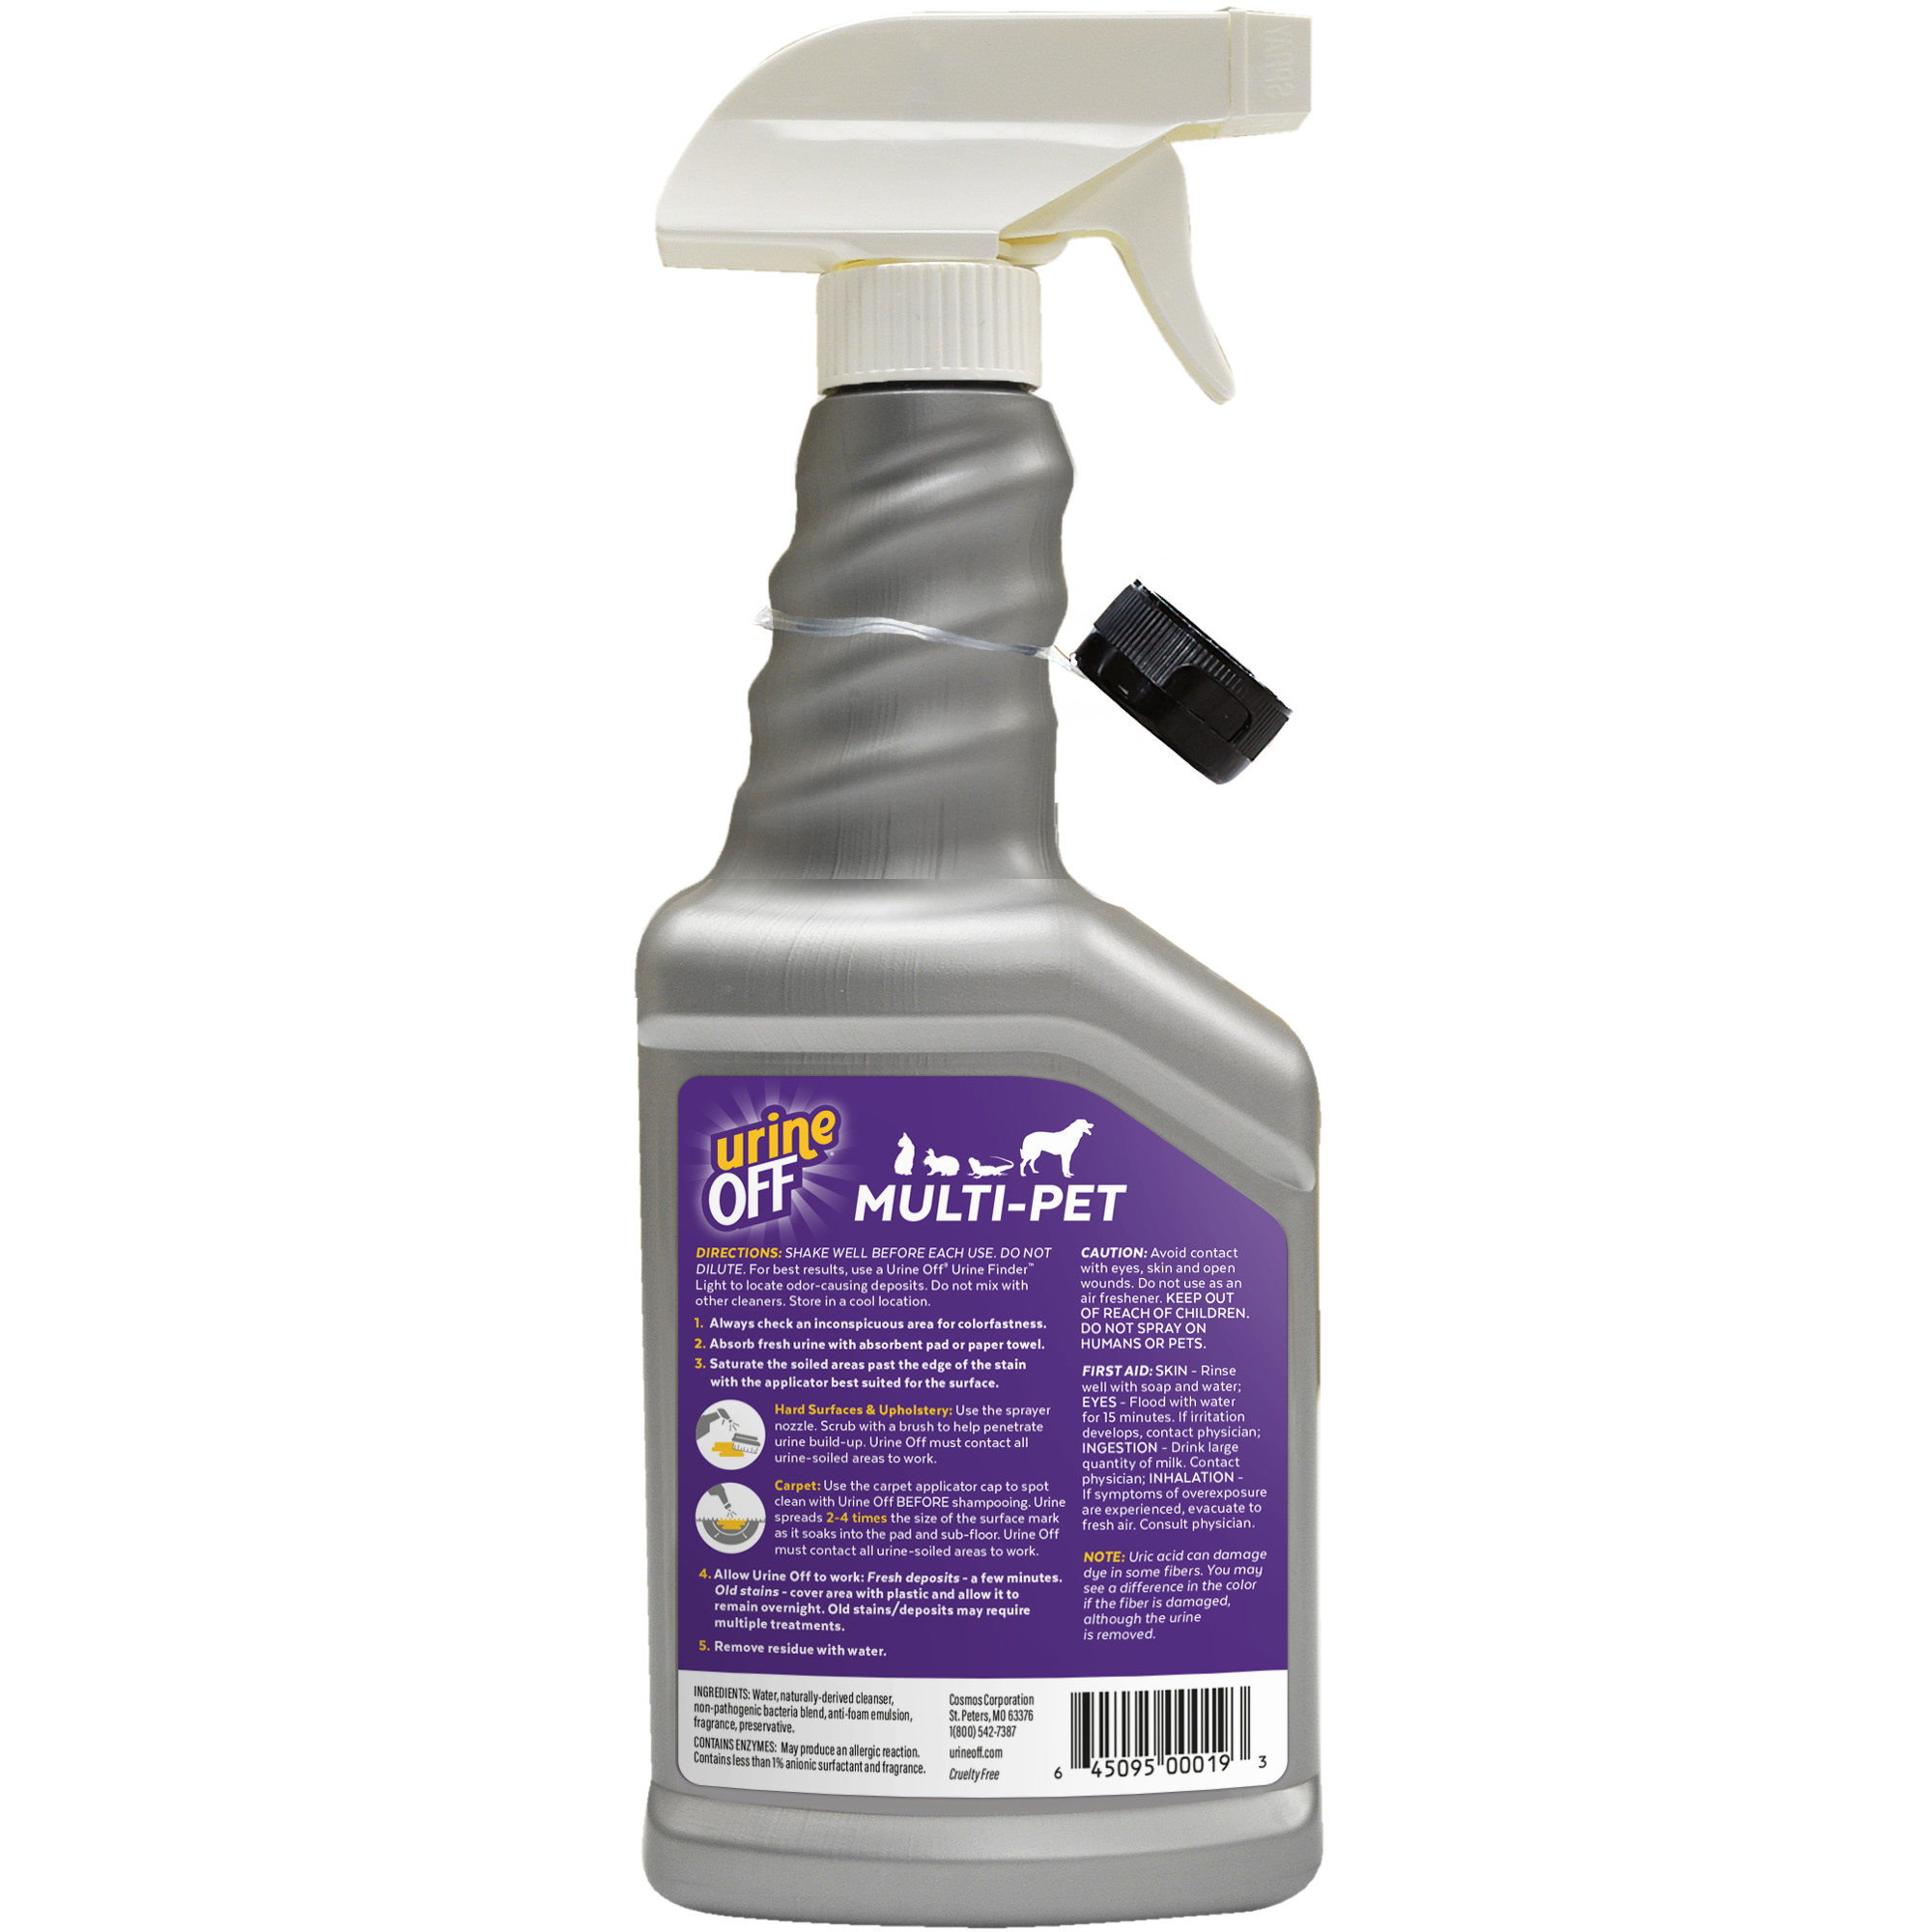 Multi-Pet Formula with Hard Surface Sprayer & Carpet Applicator Cap